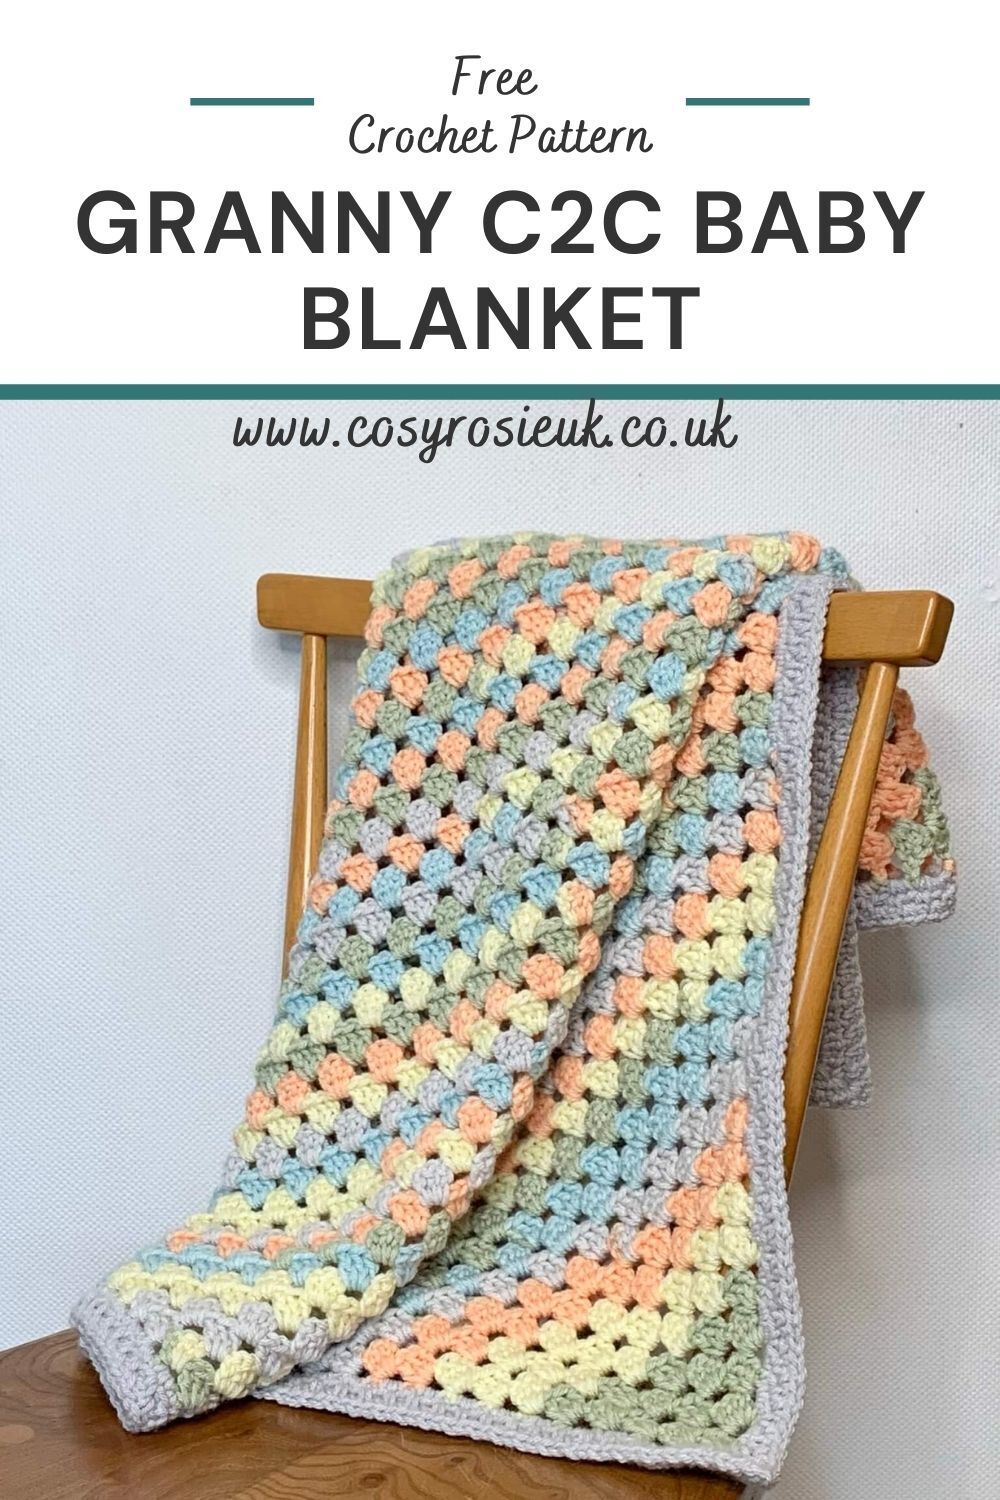 Granny C2C Blanket Pattern FREE